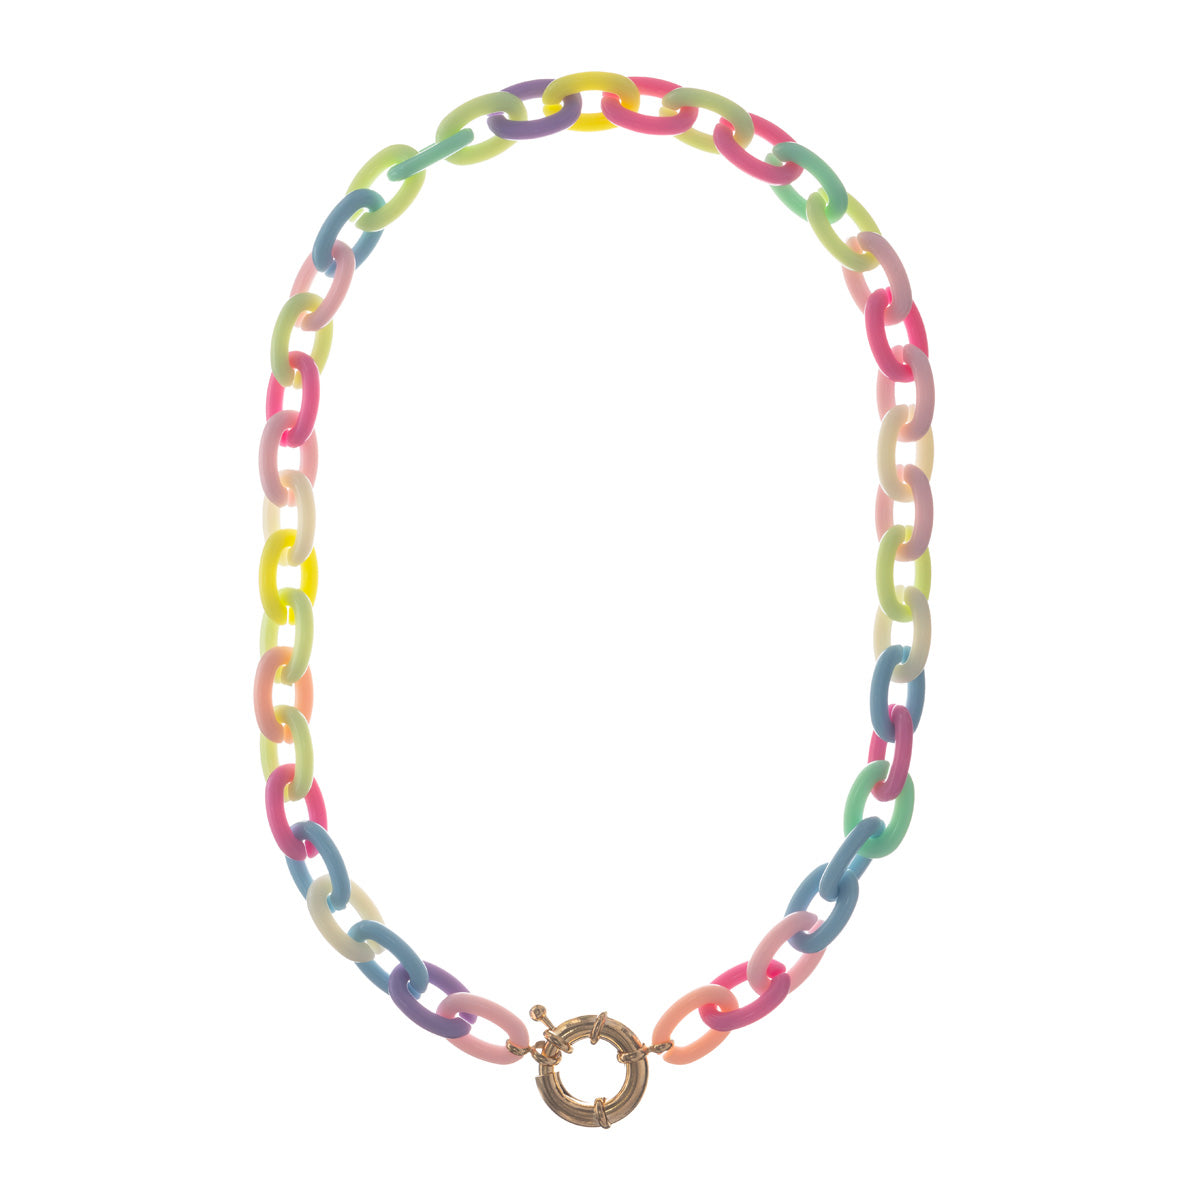 Multicolored cable chain necklace 48cm